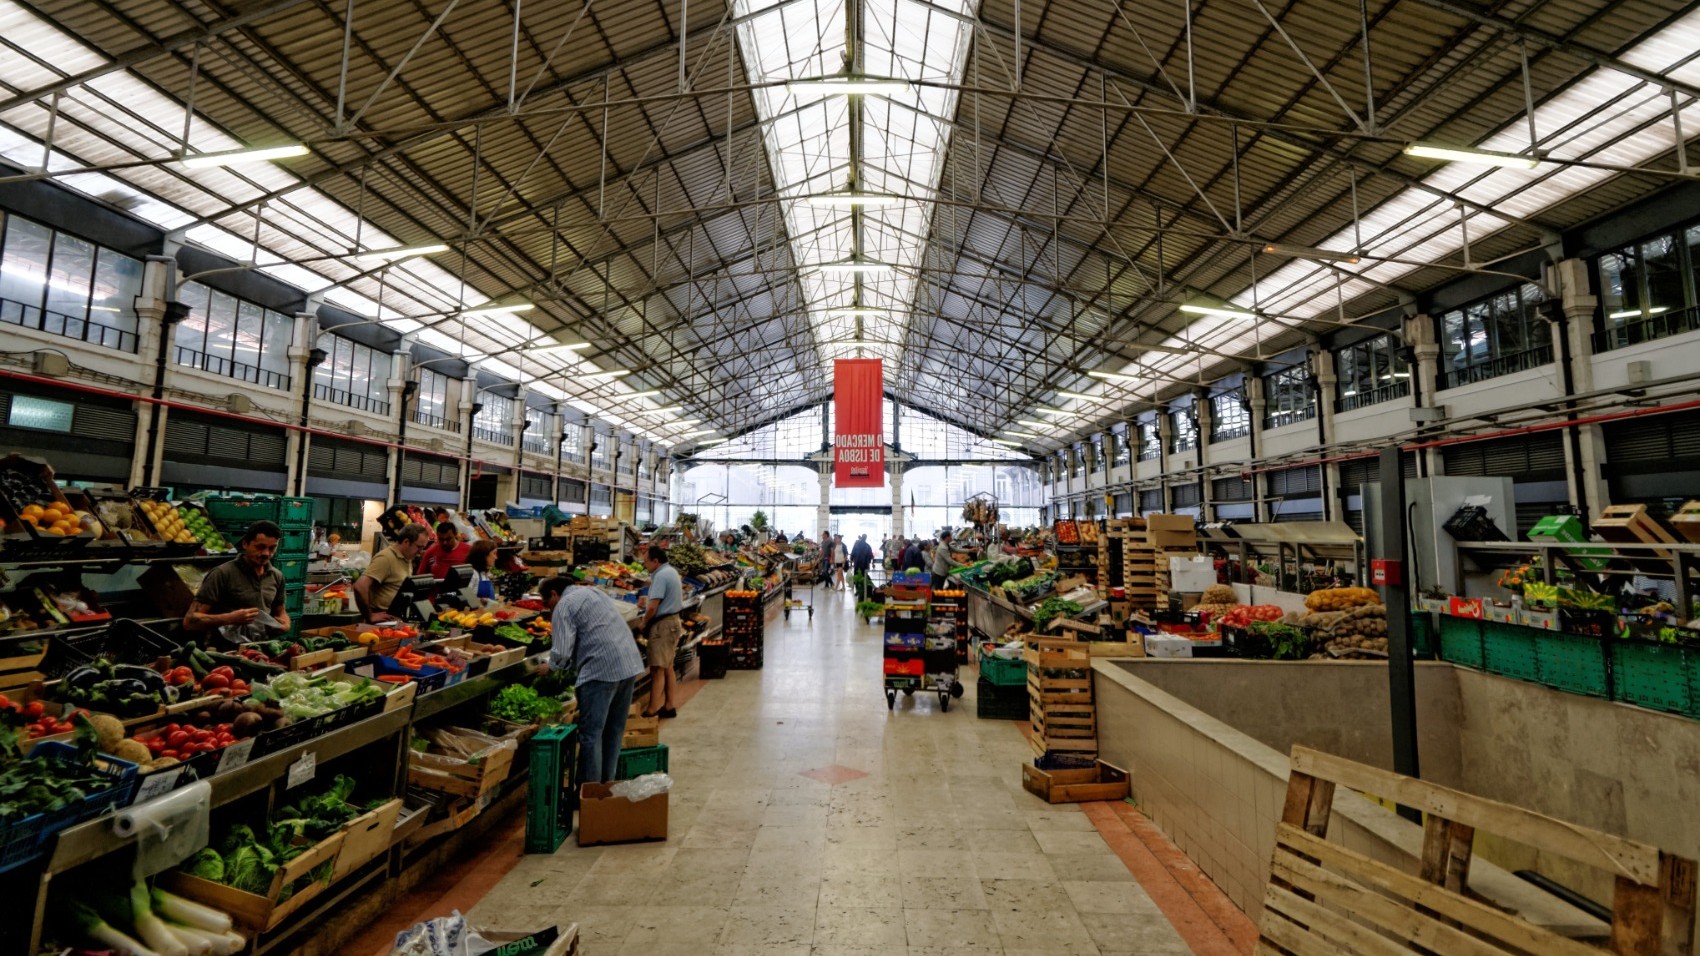 Lisbon-with-Alentejo-for-Foodies-market